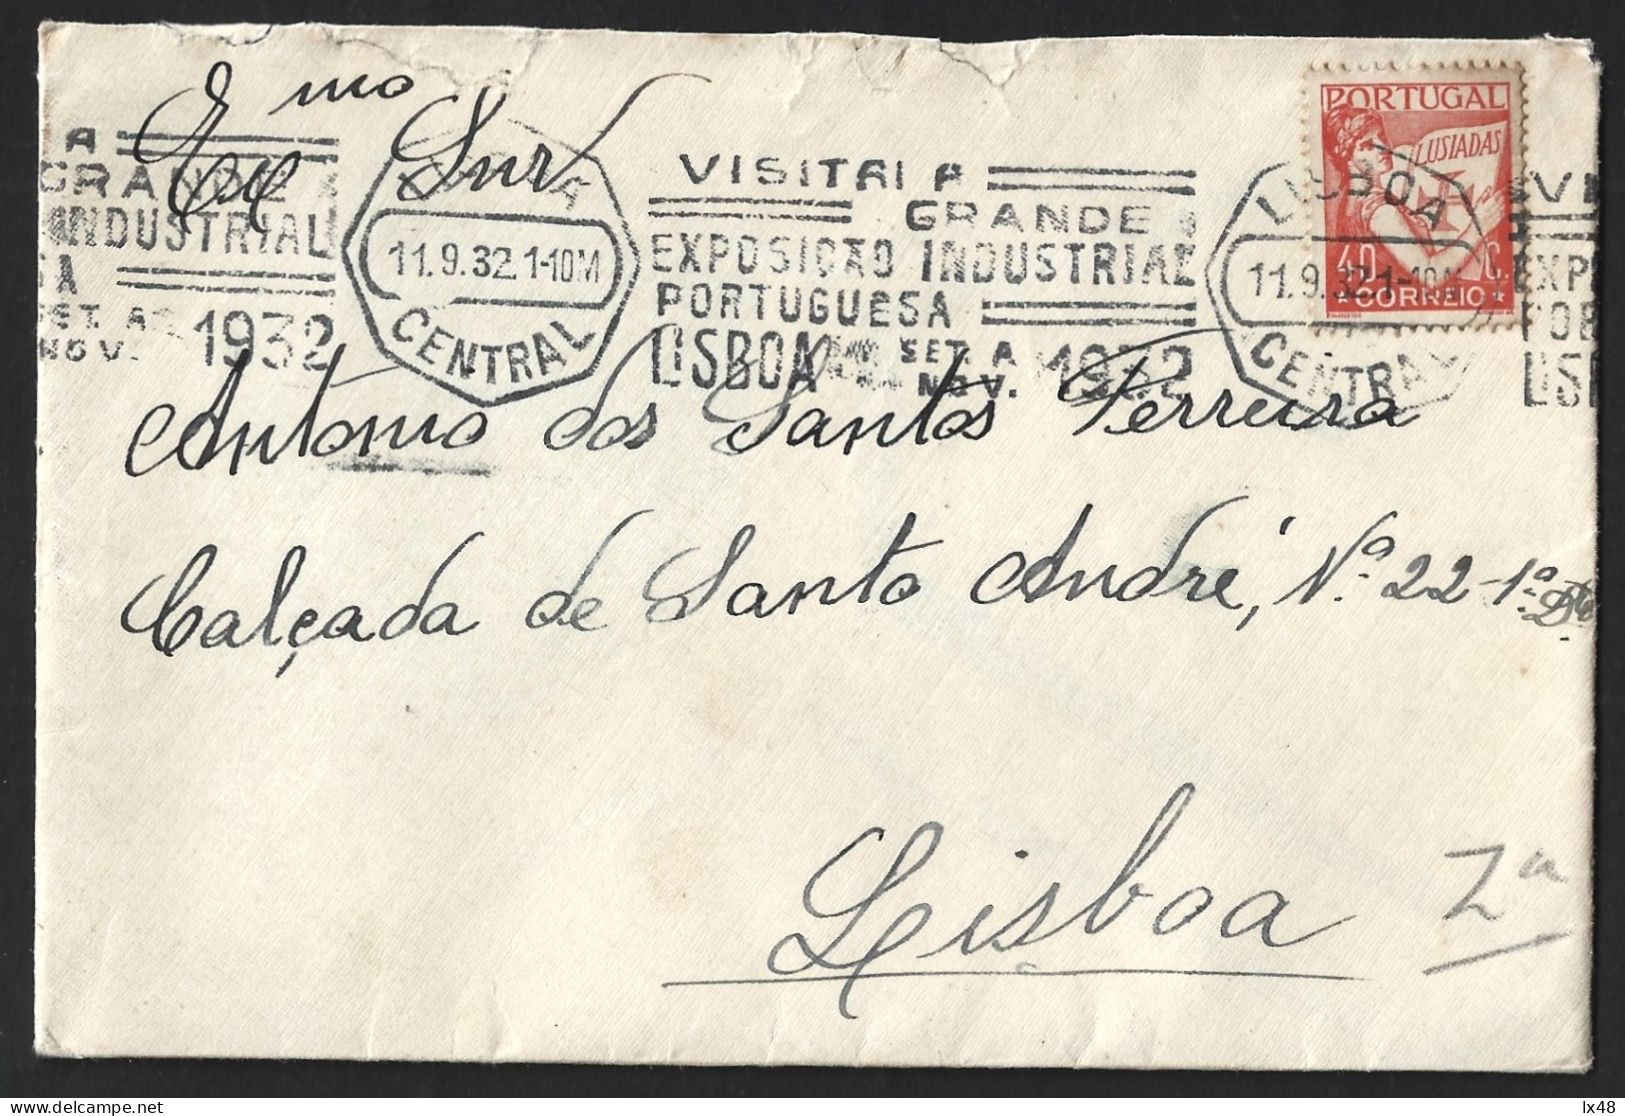 Letter With Pennant 'Visit The Great Portuguese Industrial Exhibition, Lisbon' 1932. Caravela.Visitai Exposição Indústri - Portugal